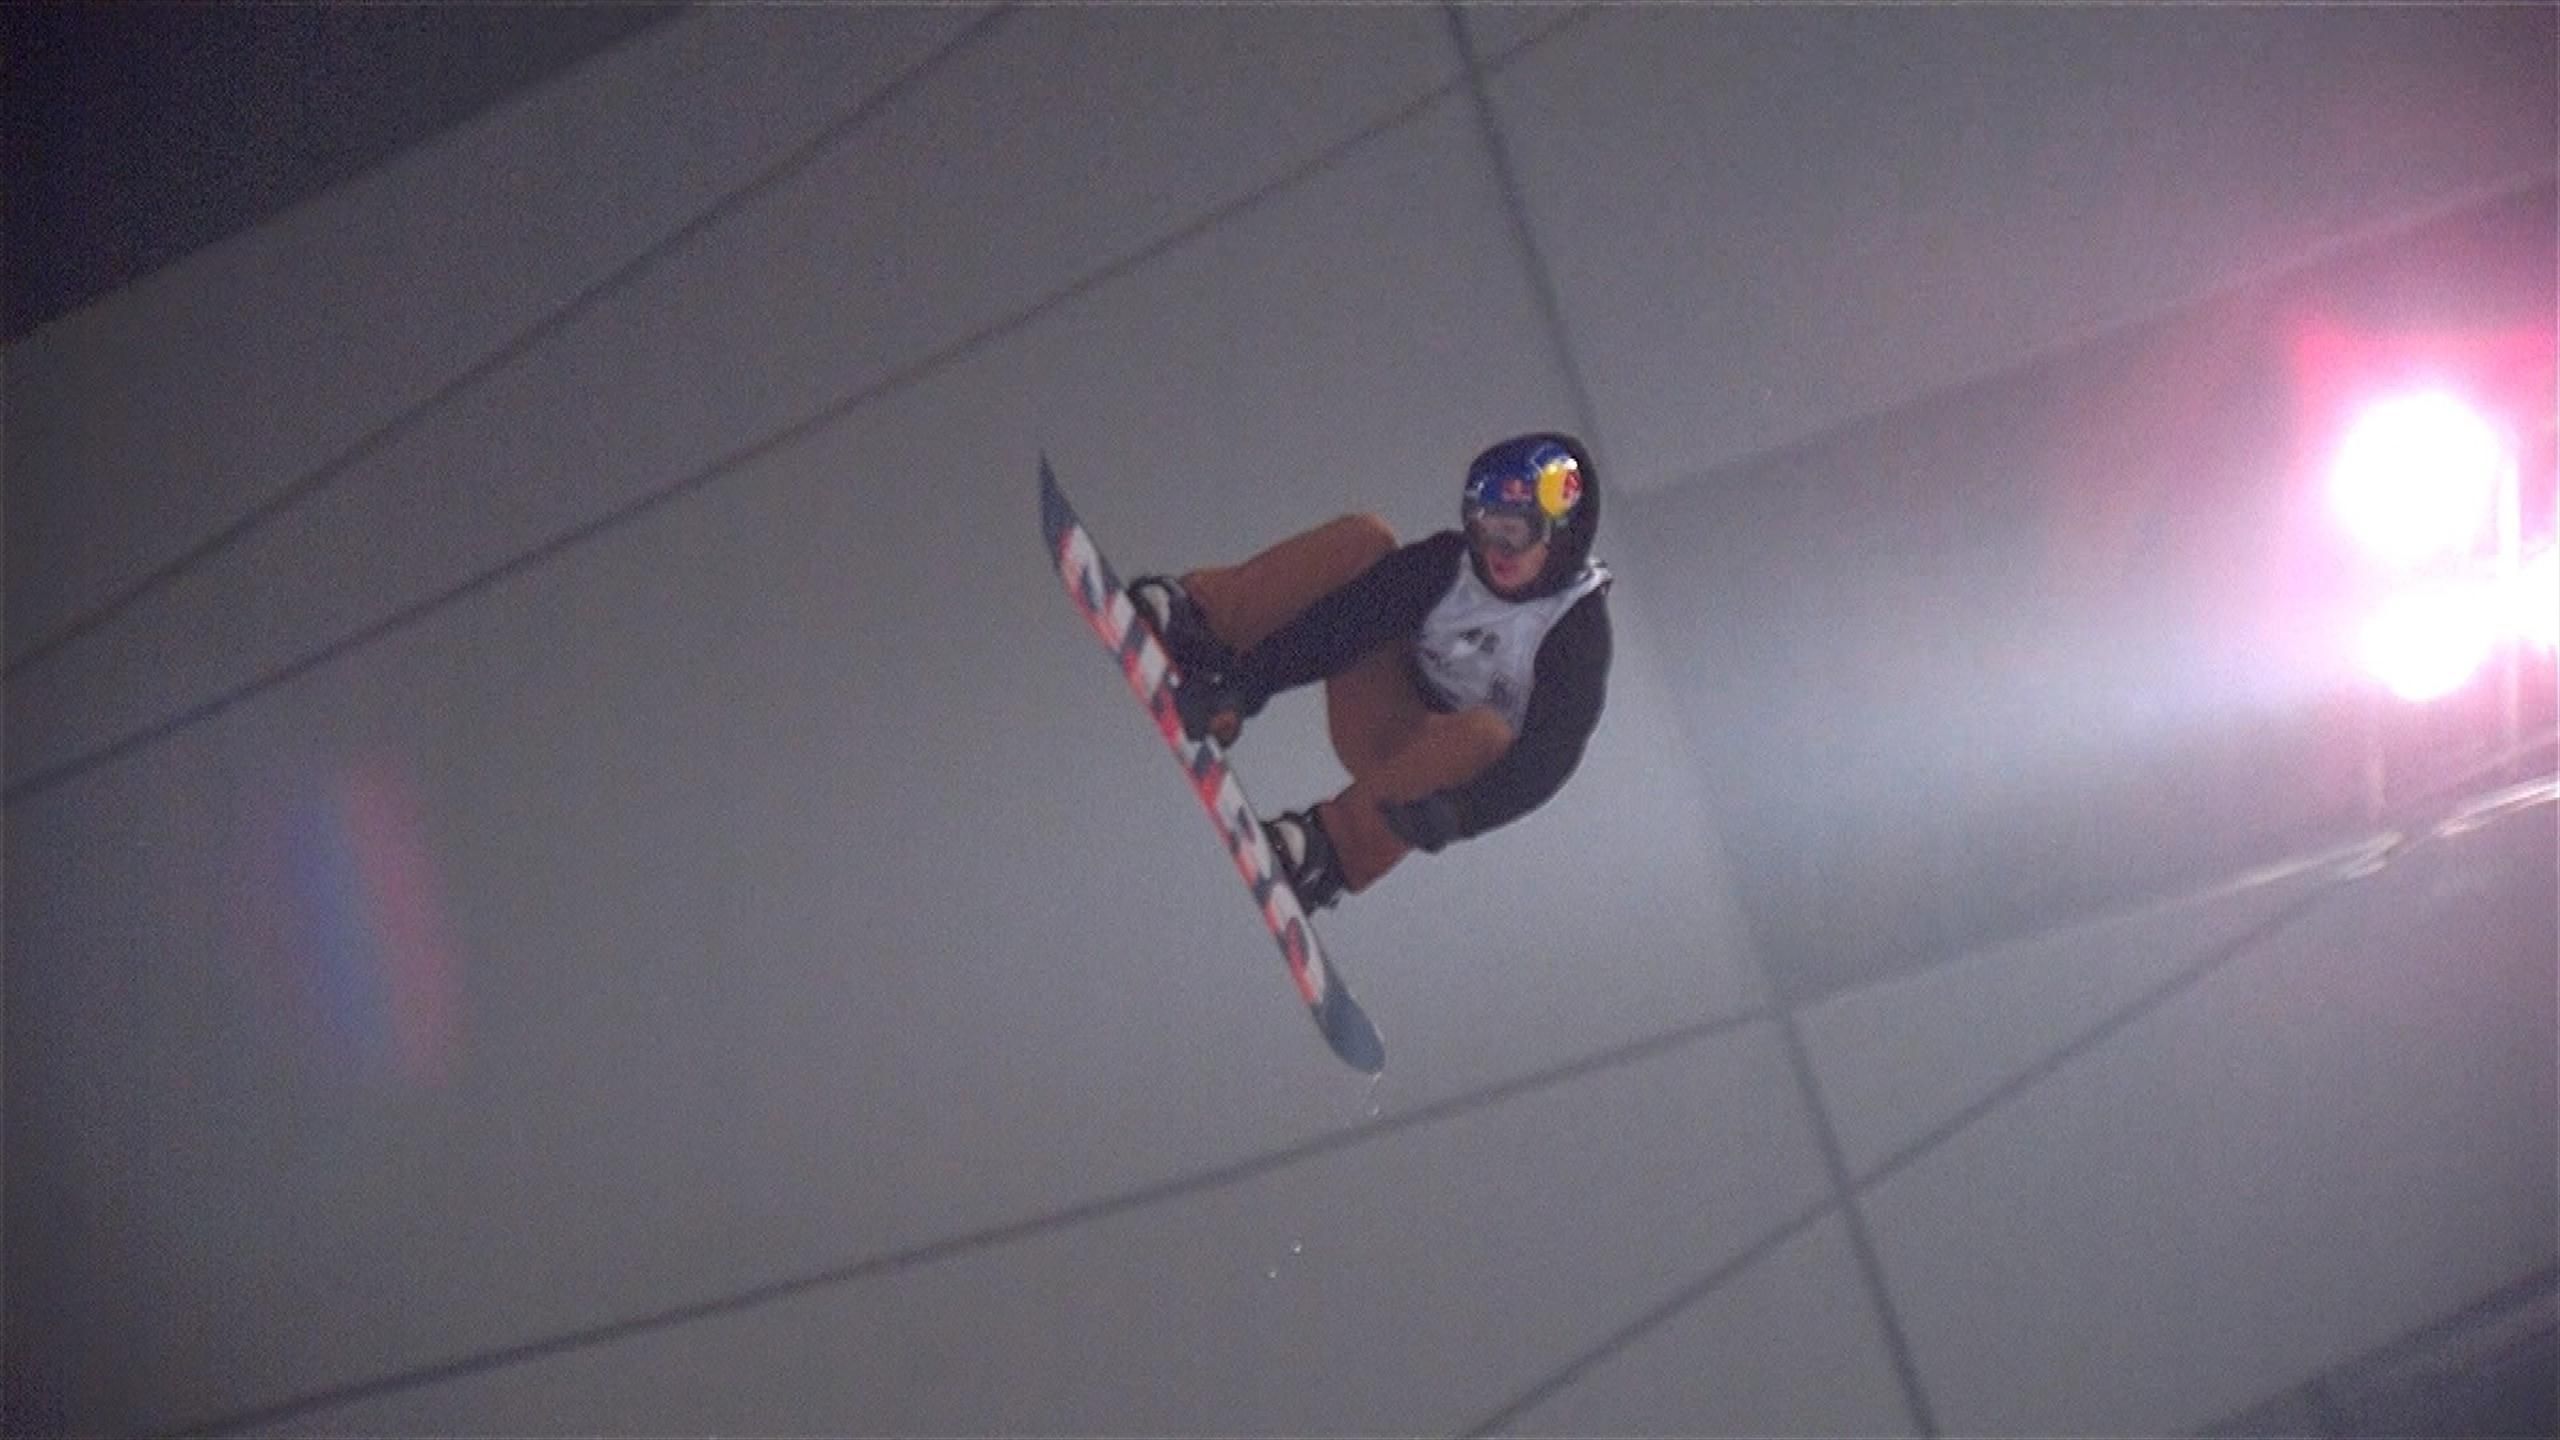 Big Air Sebastien Toutants jump - Snowboard video